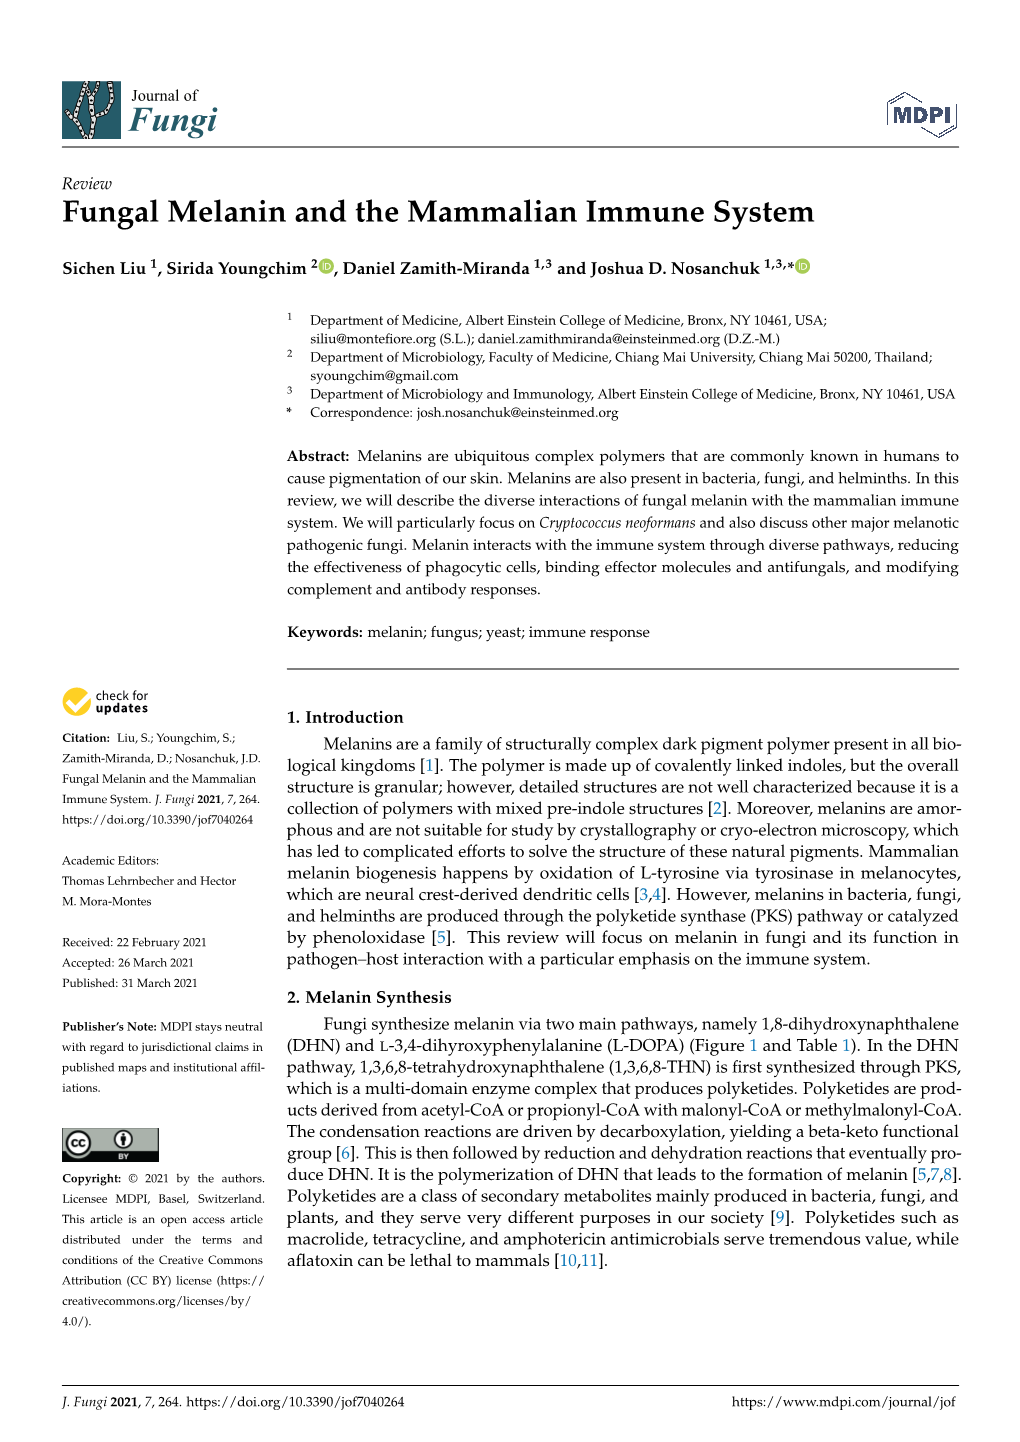 Fungal Melanin and the Mammalian Immune System